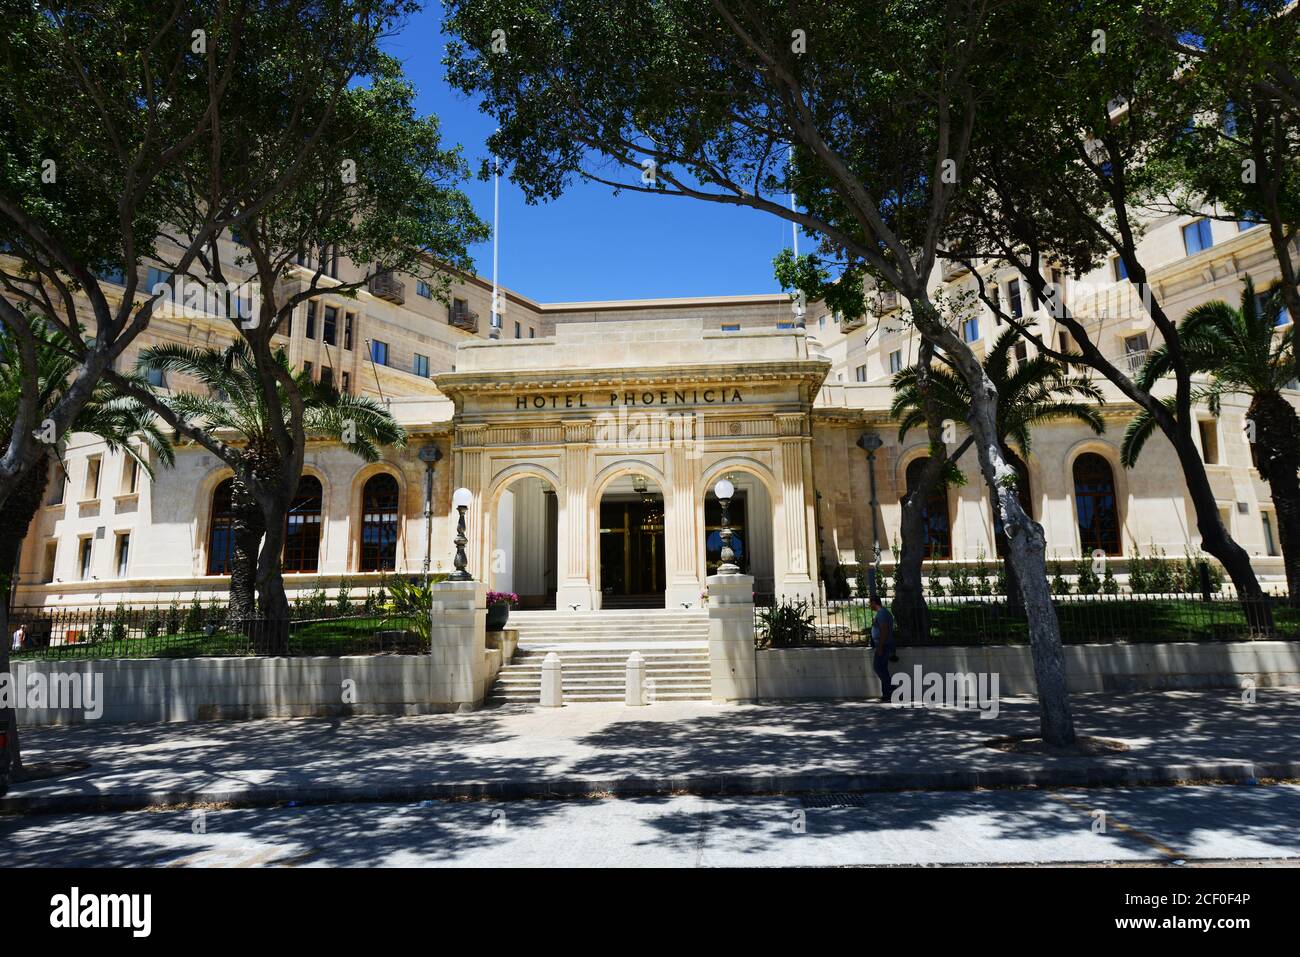 Hotel Phoenicia in Floriana, Malta. Stock Photo